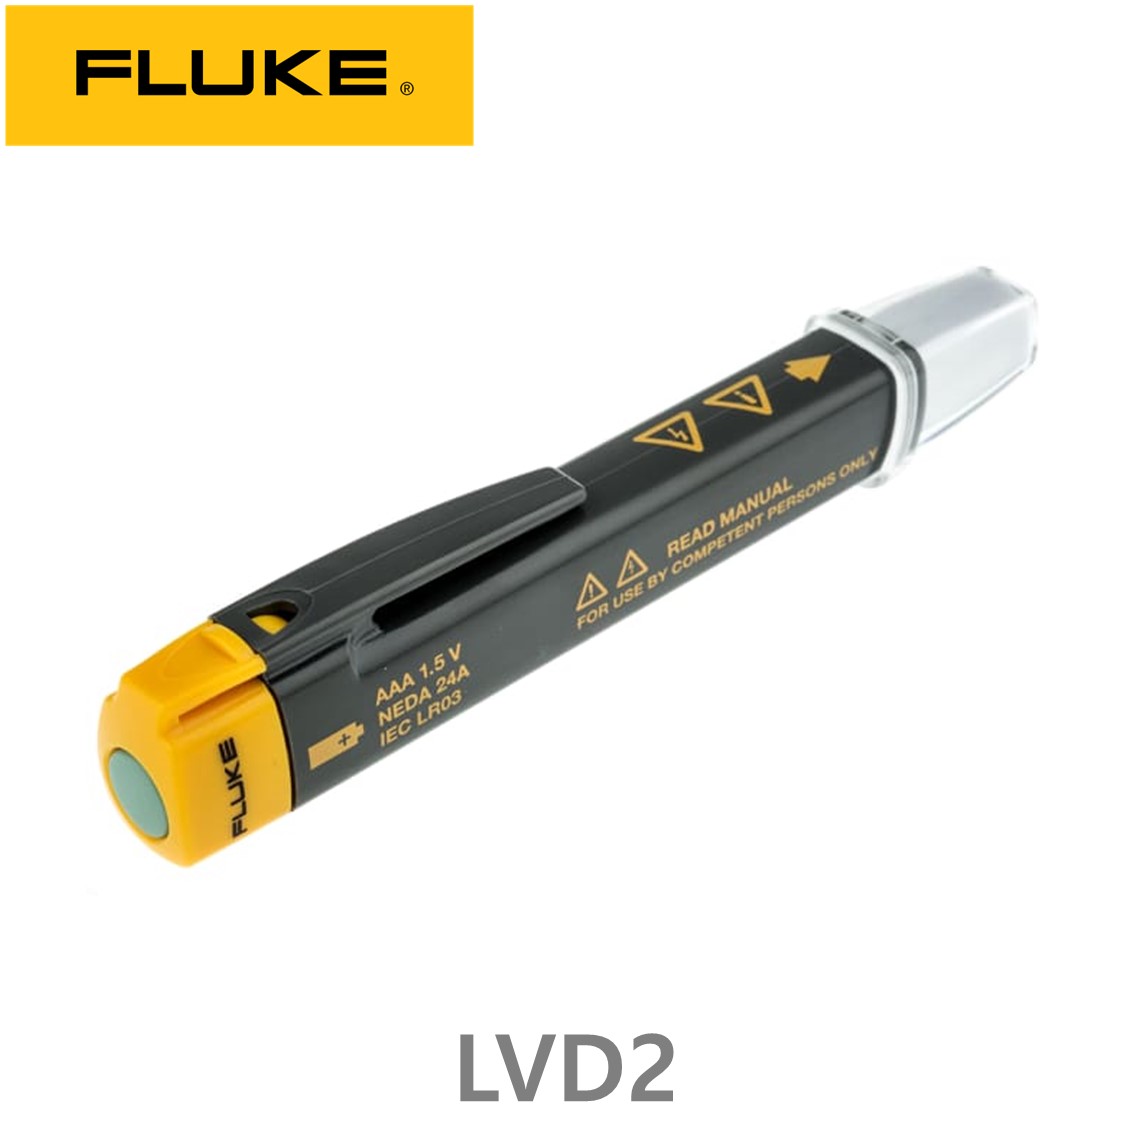 [ FLUKE LVD2 ] 정품 플루크 검전기, 테스터기, 전압측정 (펜 타입, LED 조명)